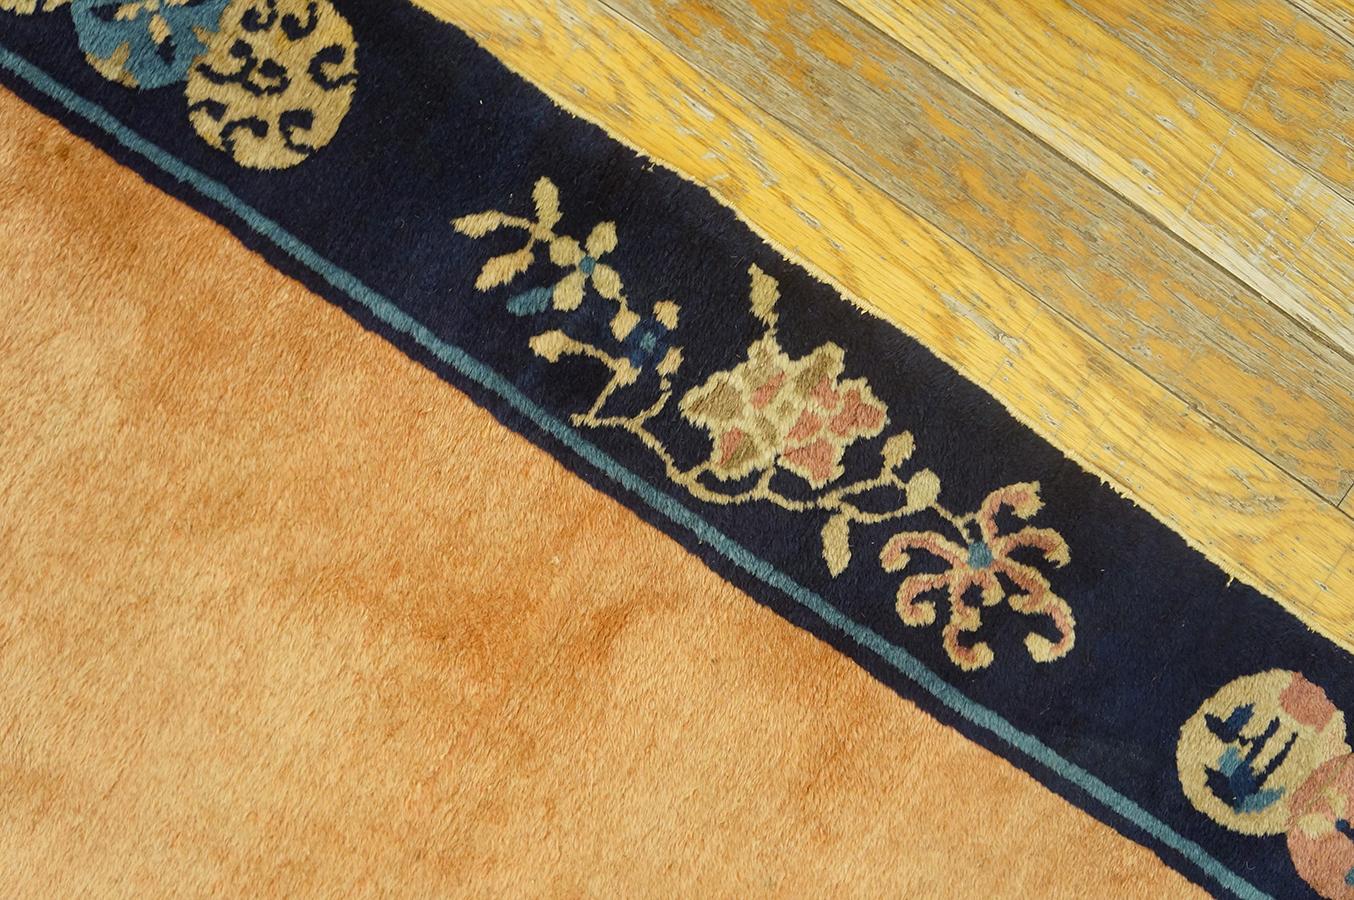 Early 20th Century Chinese Peking Carpet ( 2'4